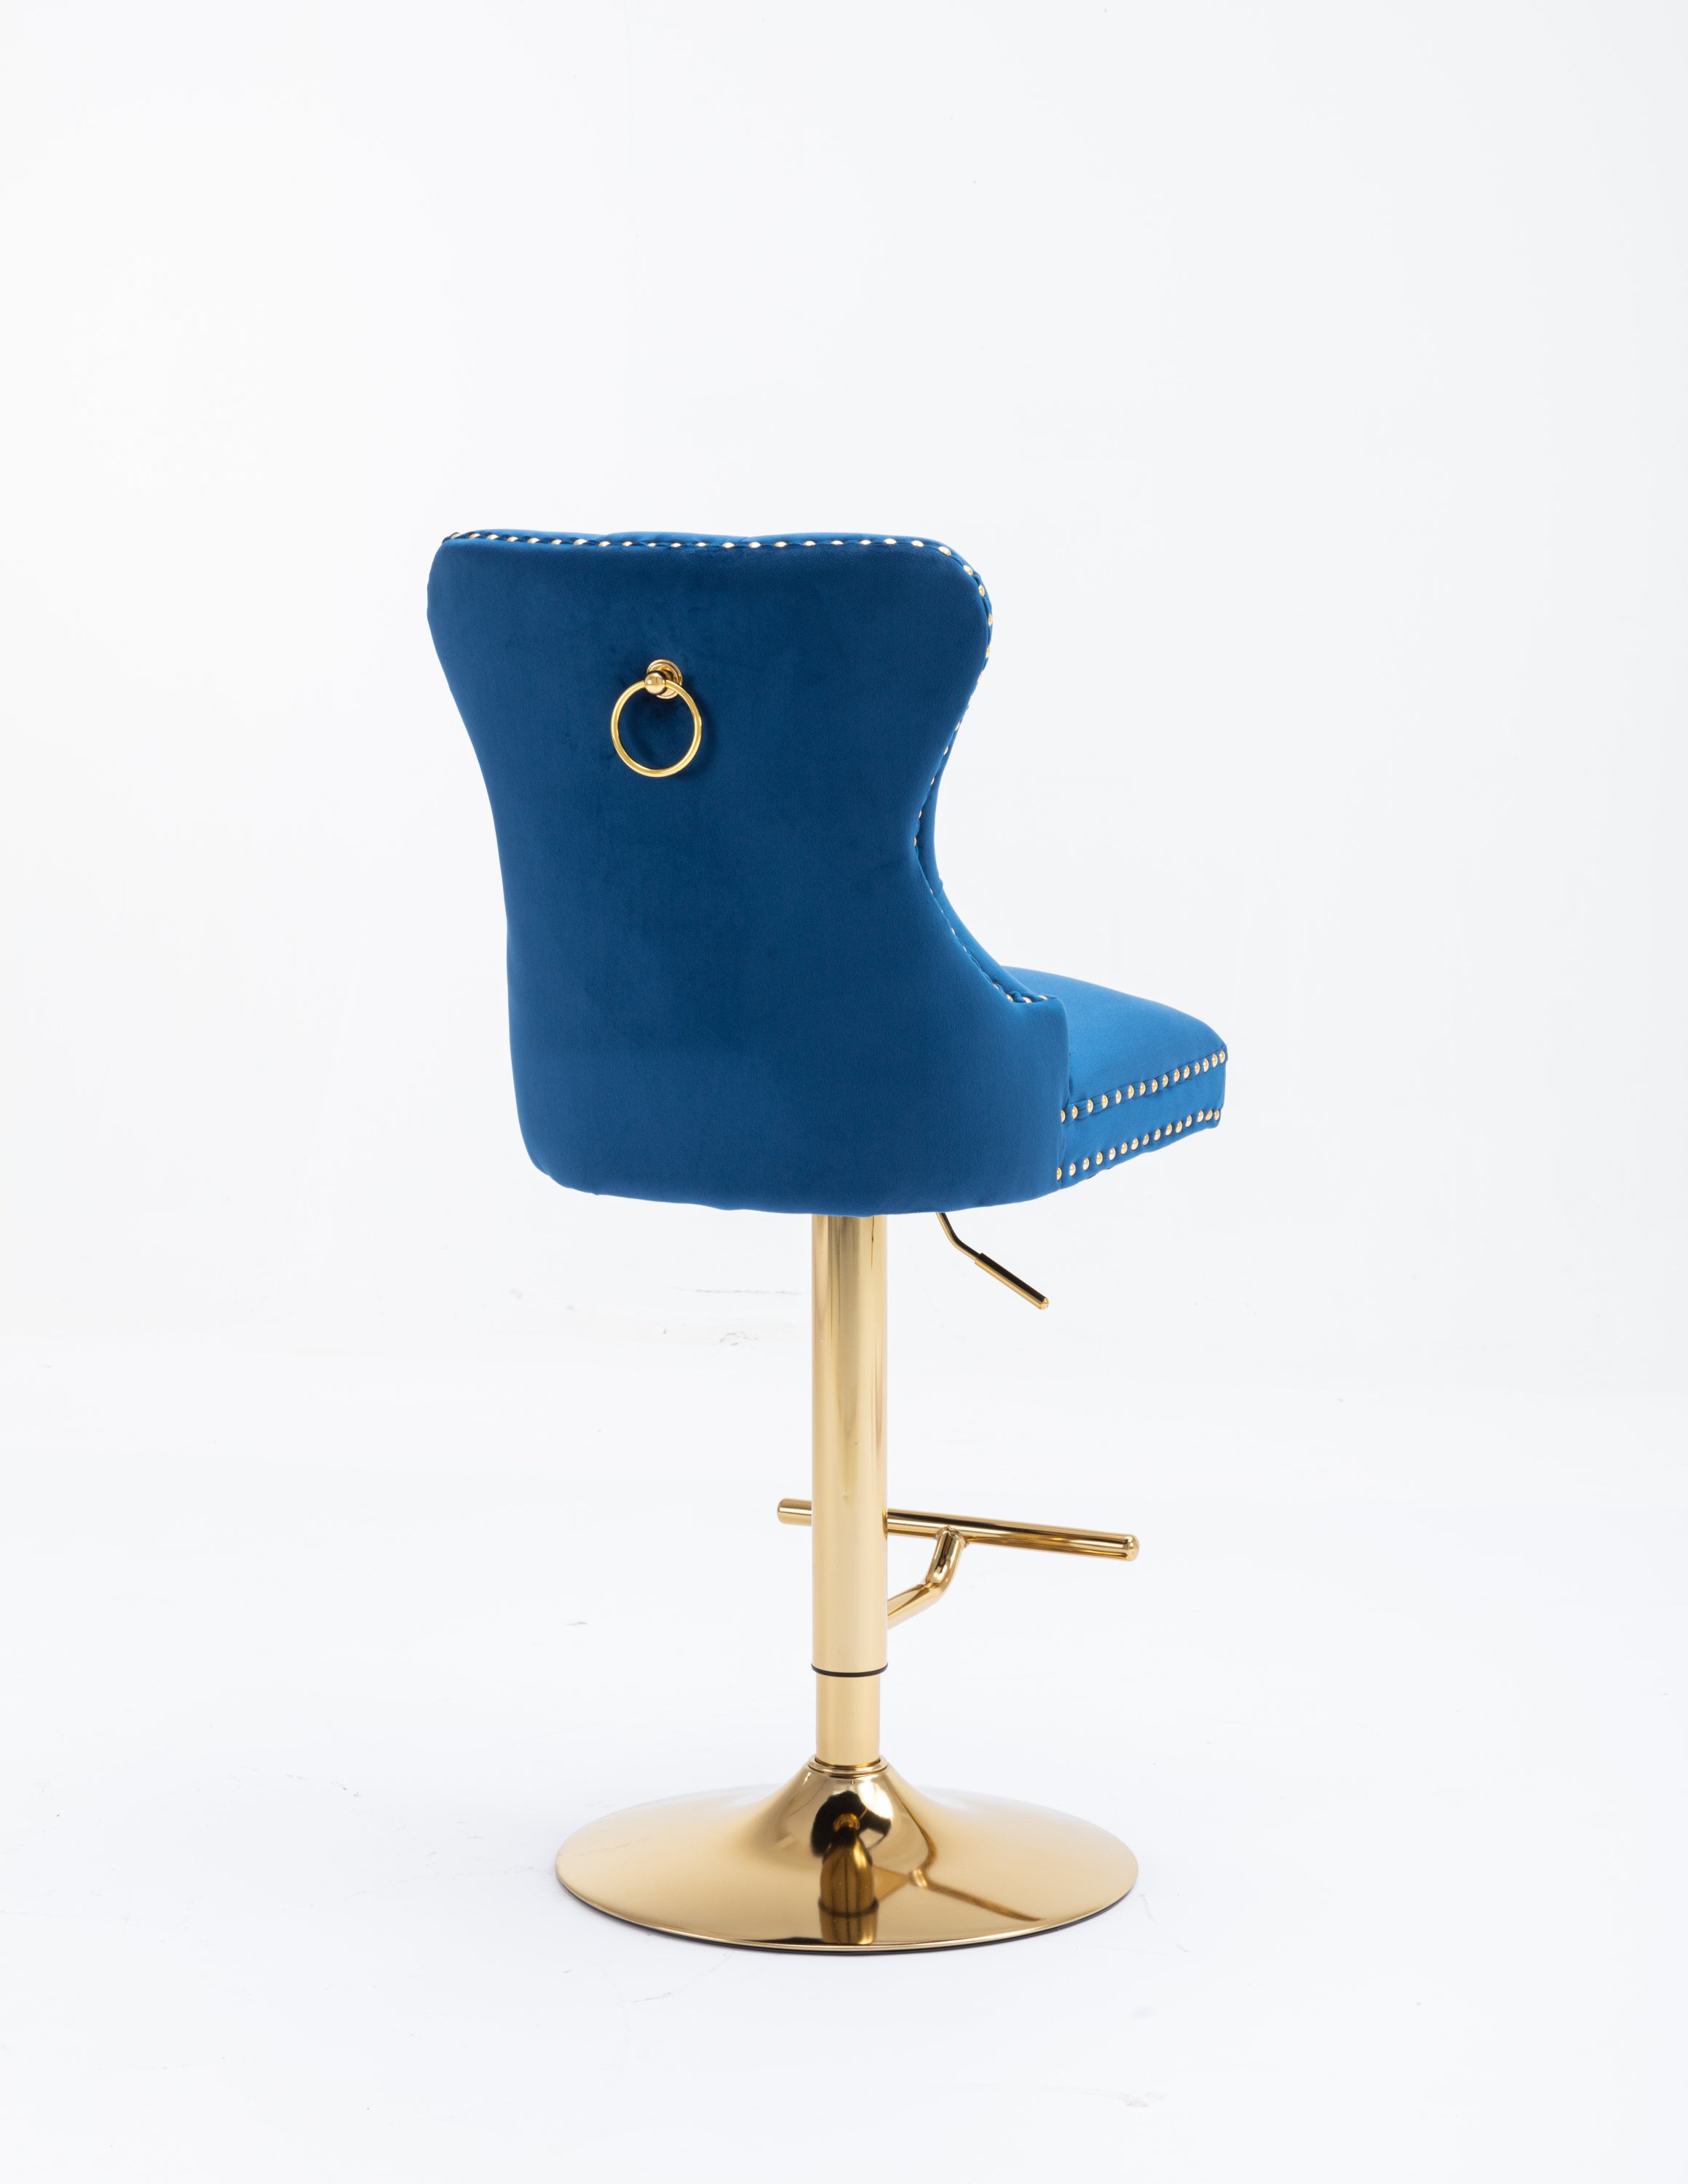 Modern Swivel Bar Stools Chair Adjustable (Set of 2) - Chrome Golden Base/ Blue